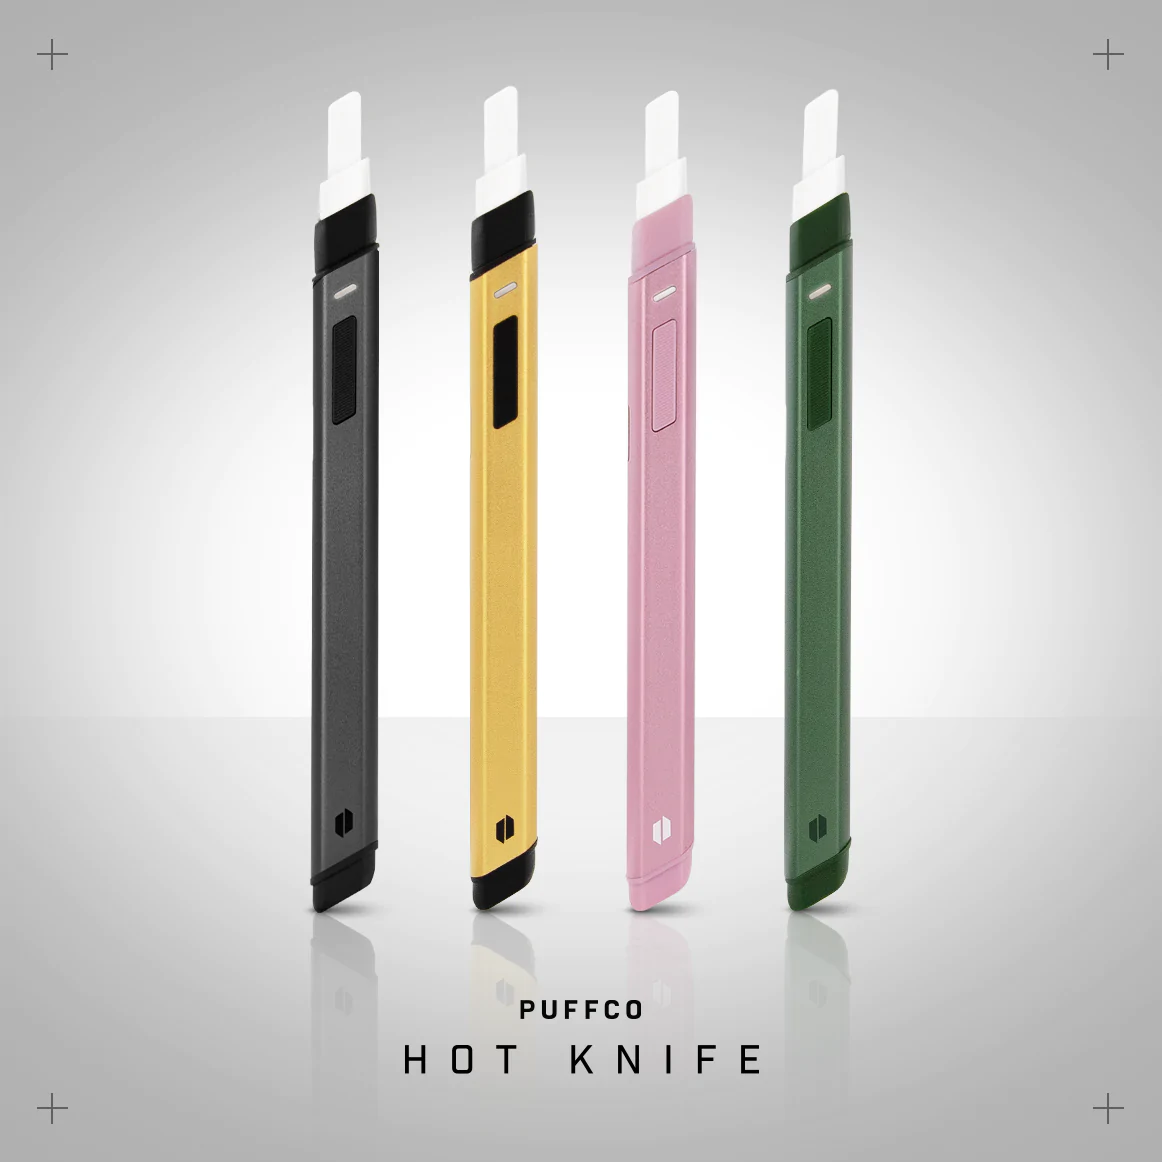 Puffco Hot Knife Limited Colors, Denver's Best Online Smoke Shop